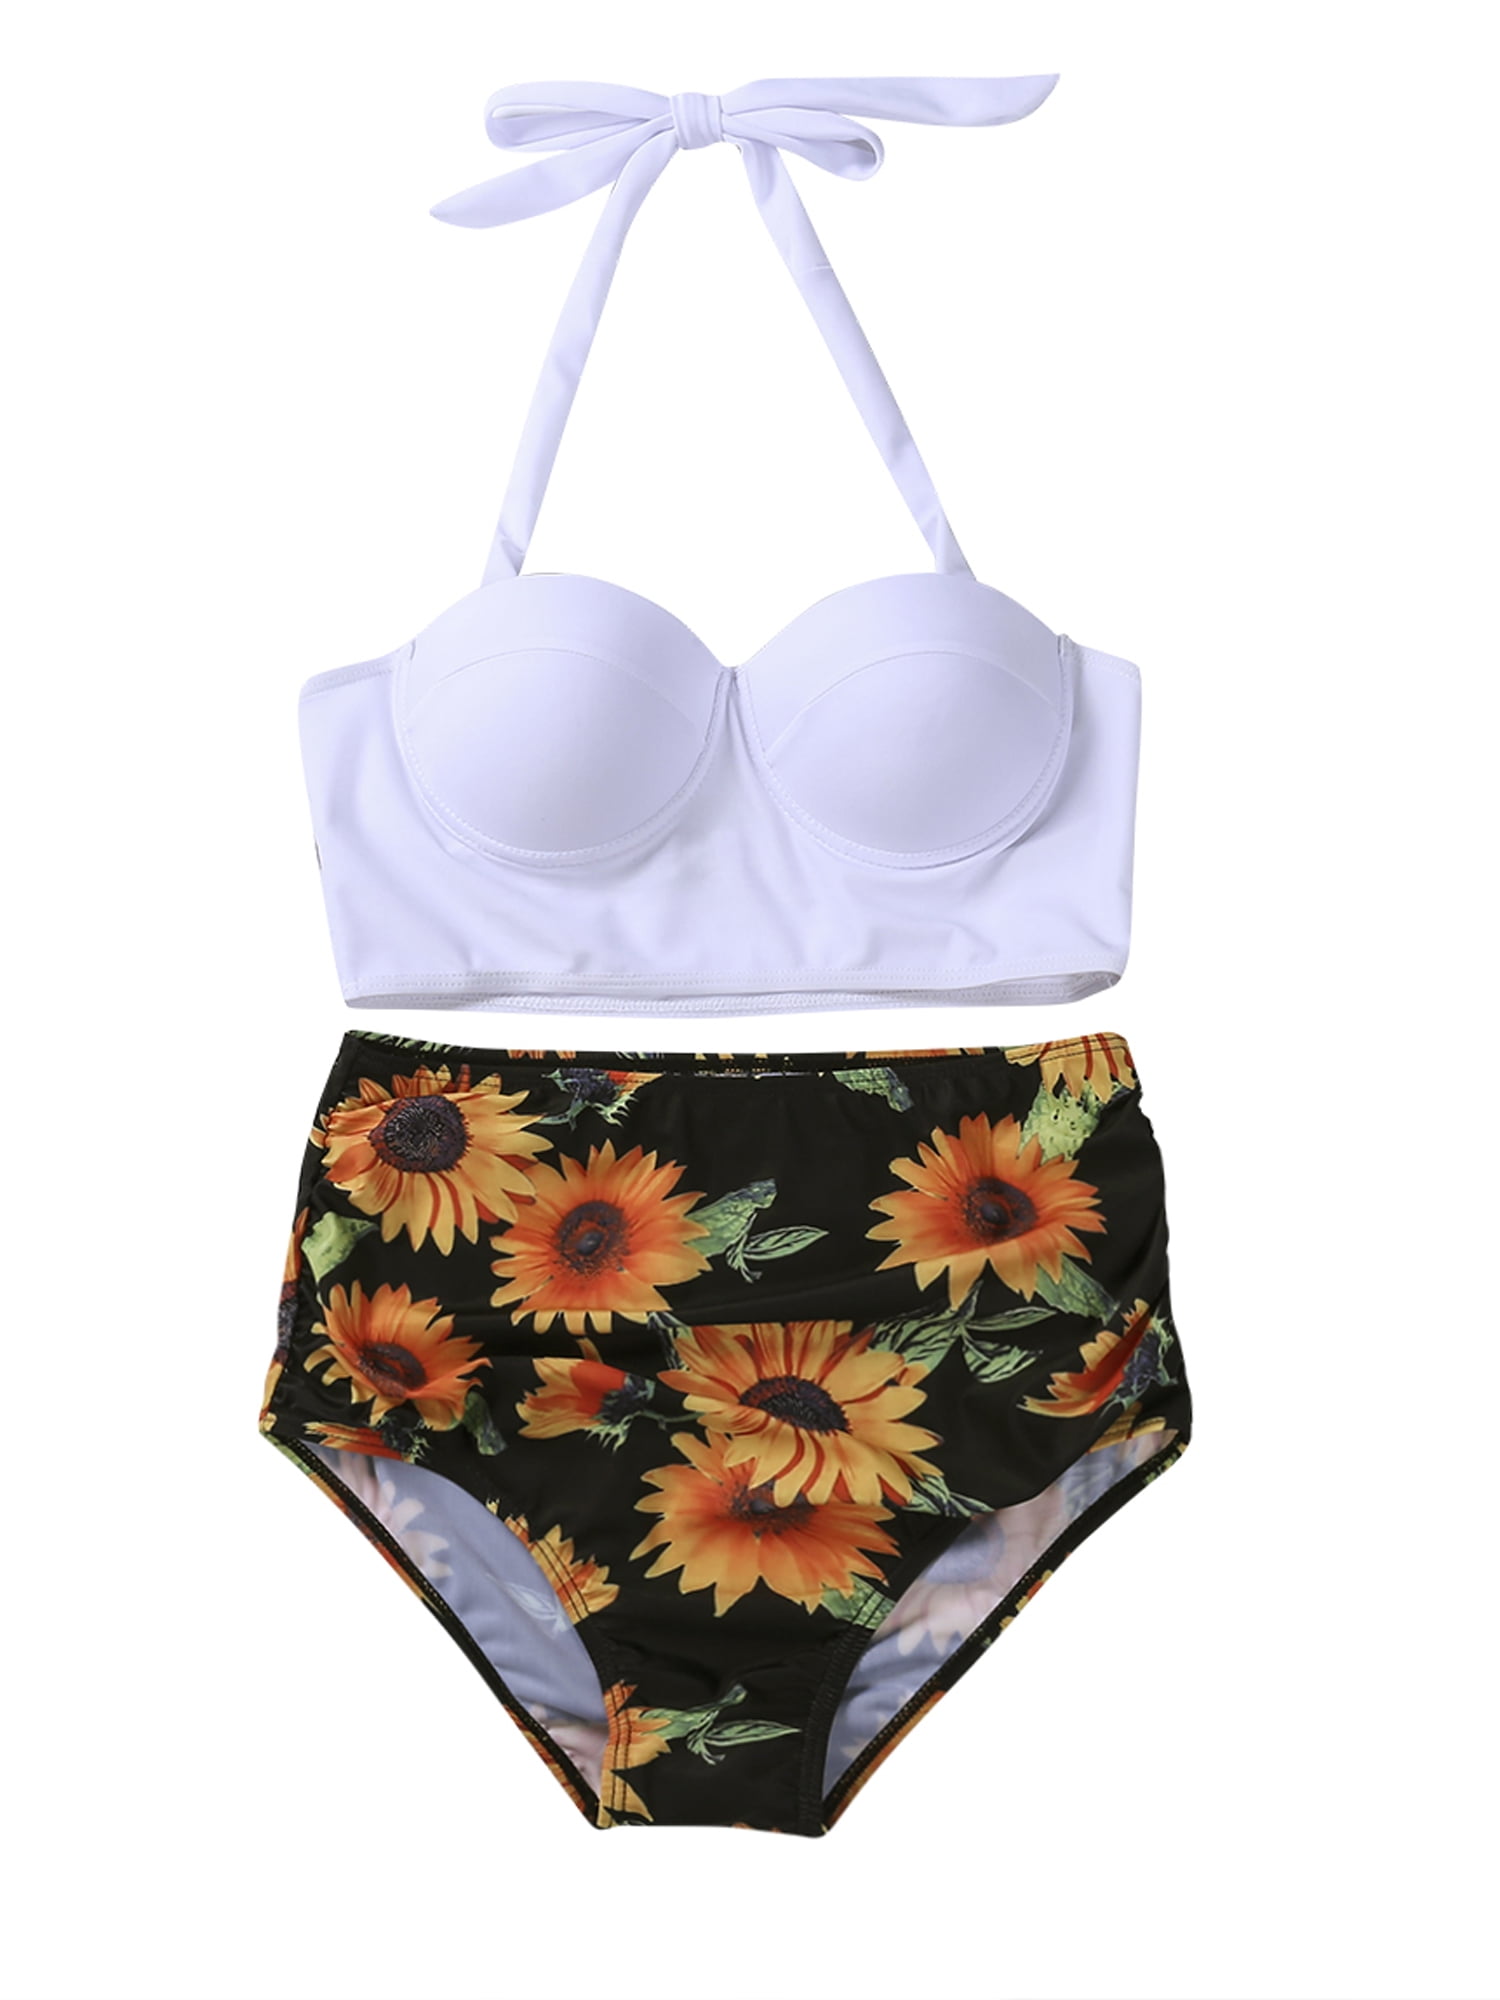 LiaoTI Bikini Swimsuits Retro Ruffled Flounce Crop Bikini Top with High Waisted Bottom Two Piece Tankini Set